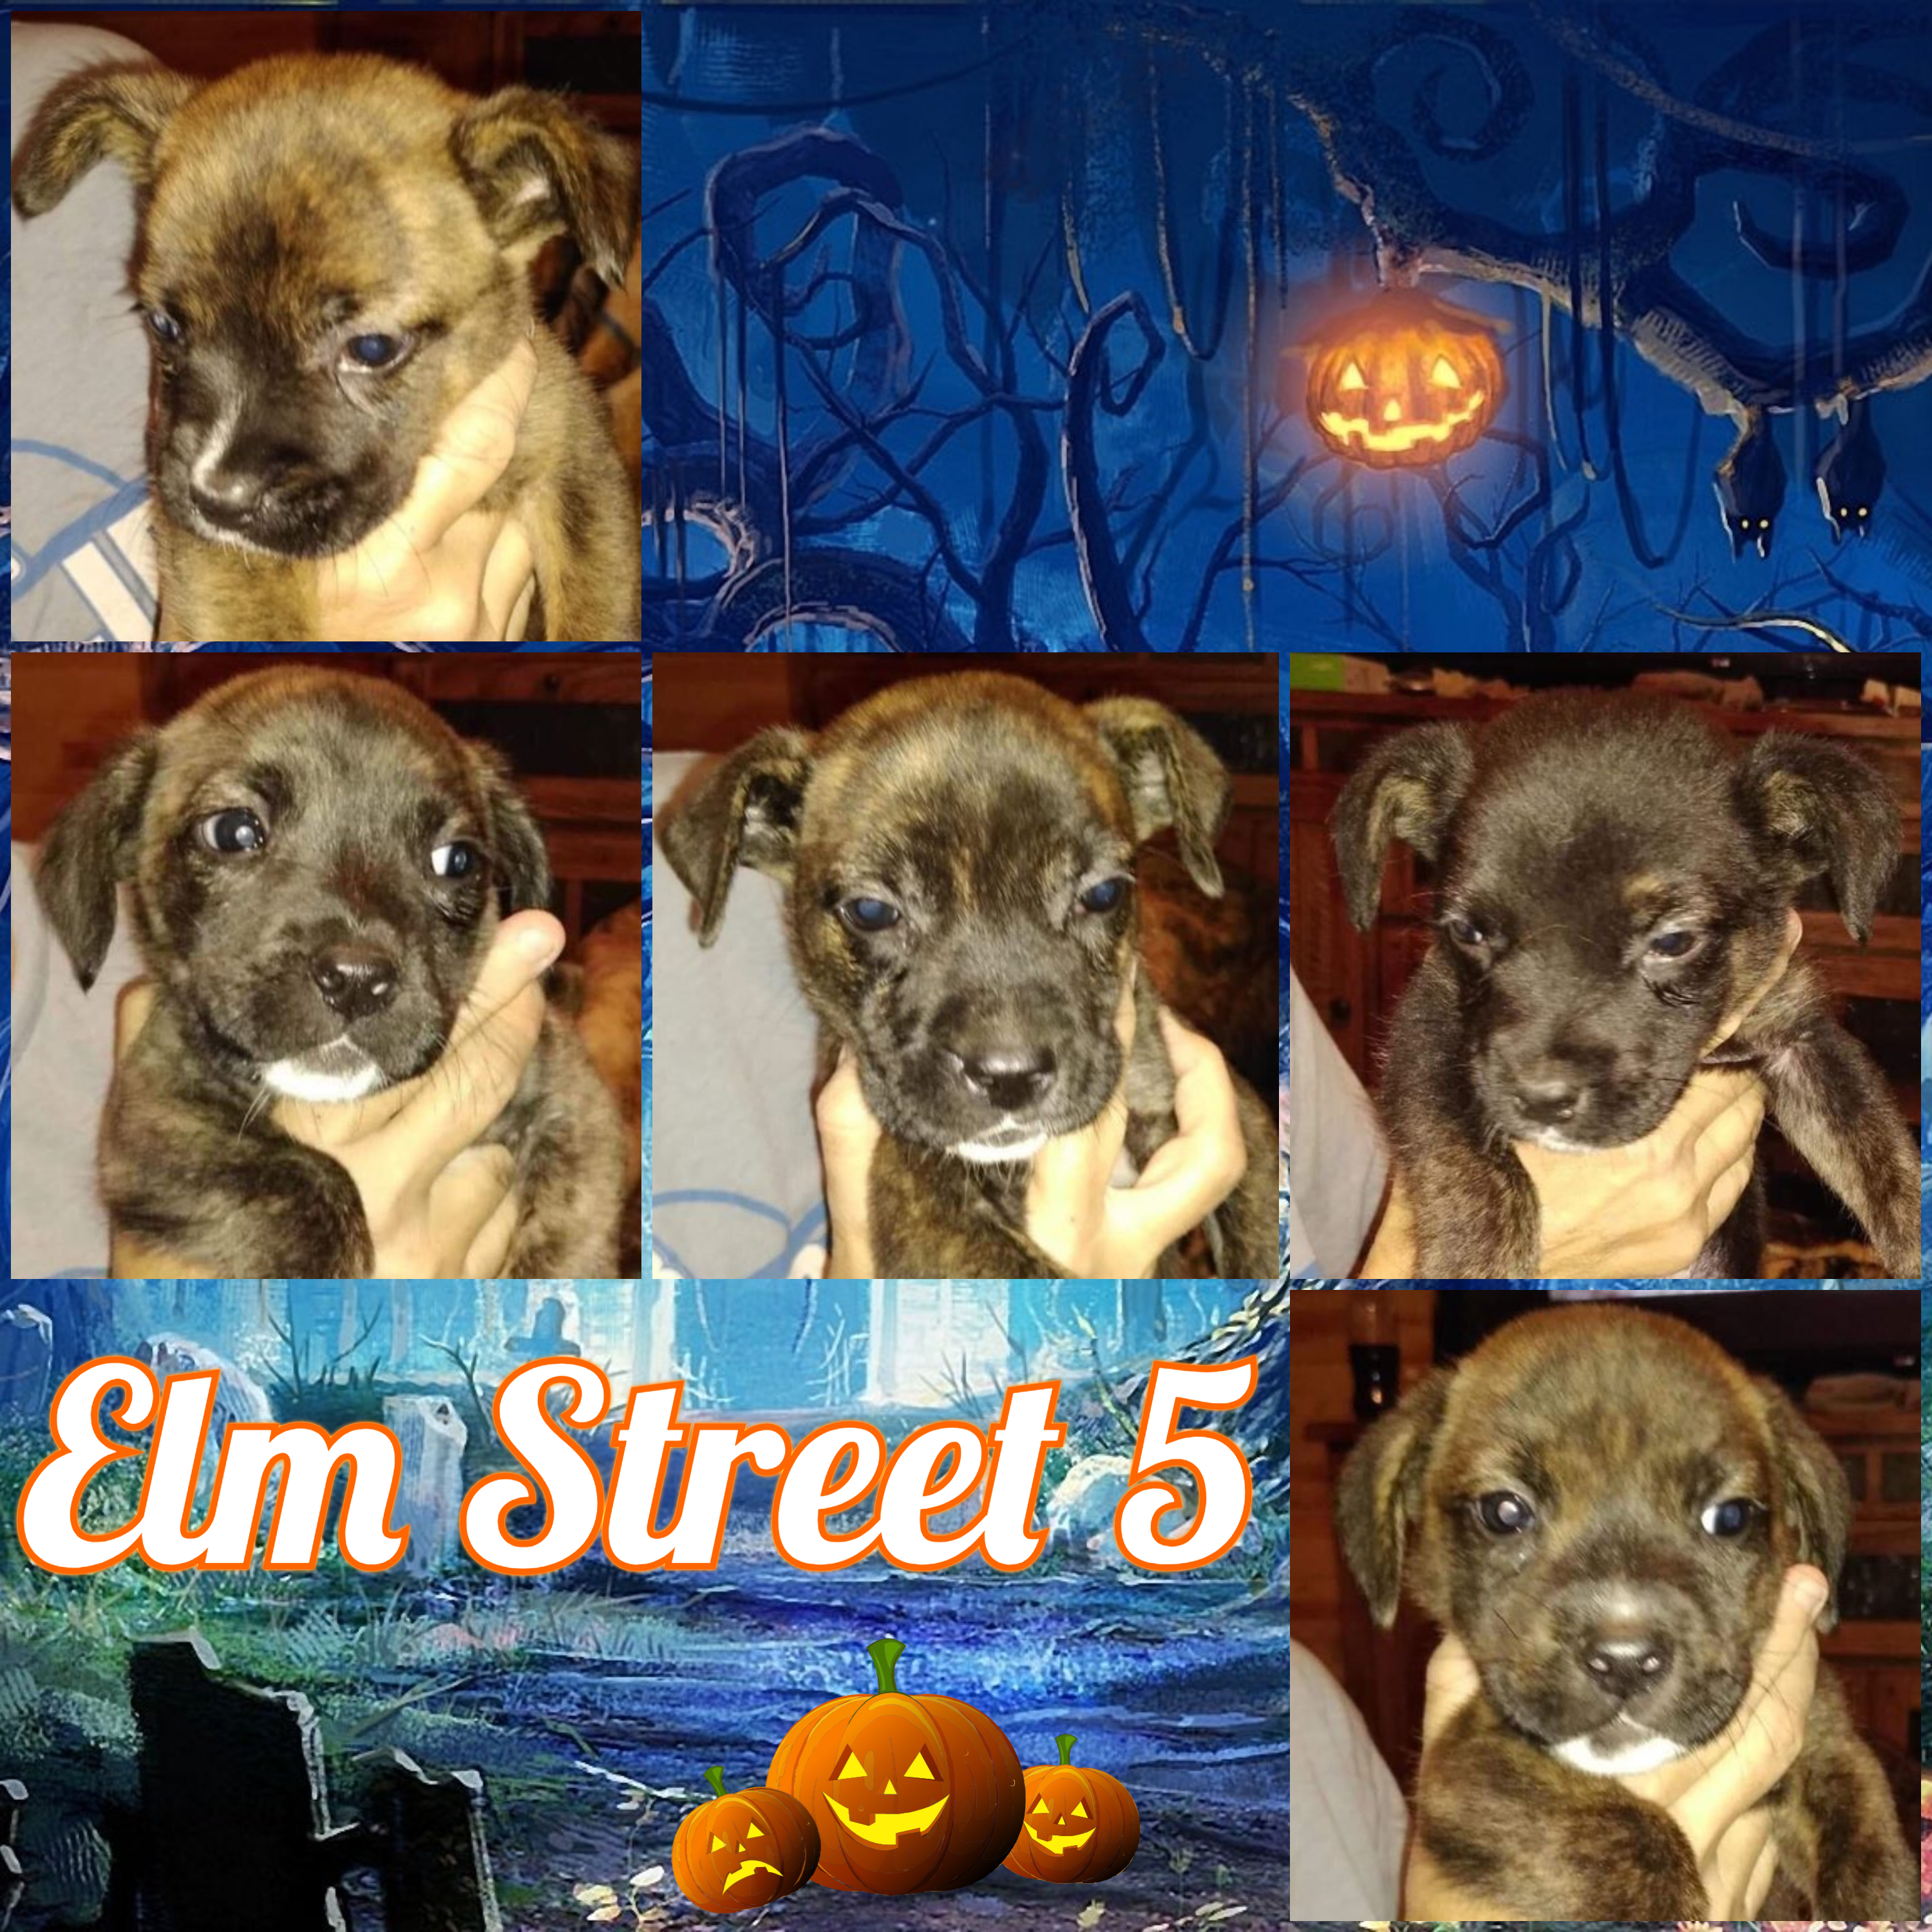 Elm Street 5 detail page